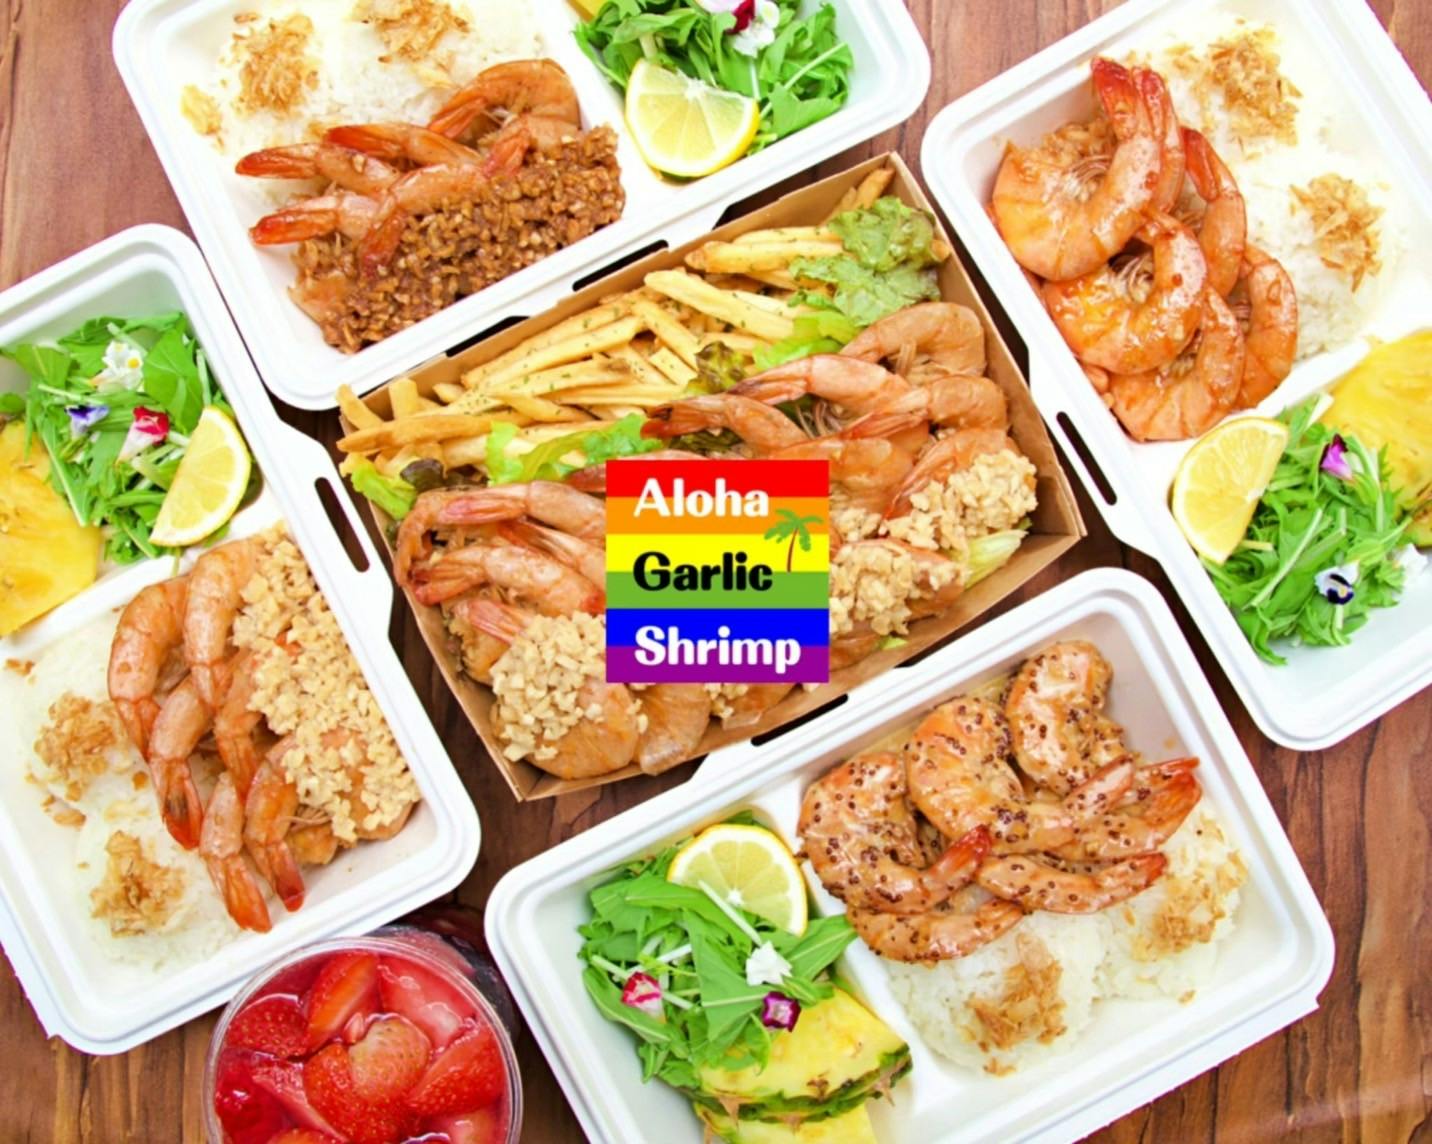 Aloha Garlic Shrimp 「アロハガーリックシュリンプ」のブランド画像